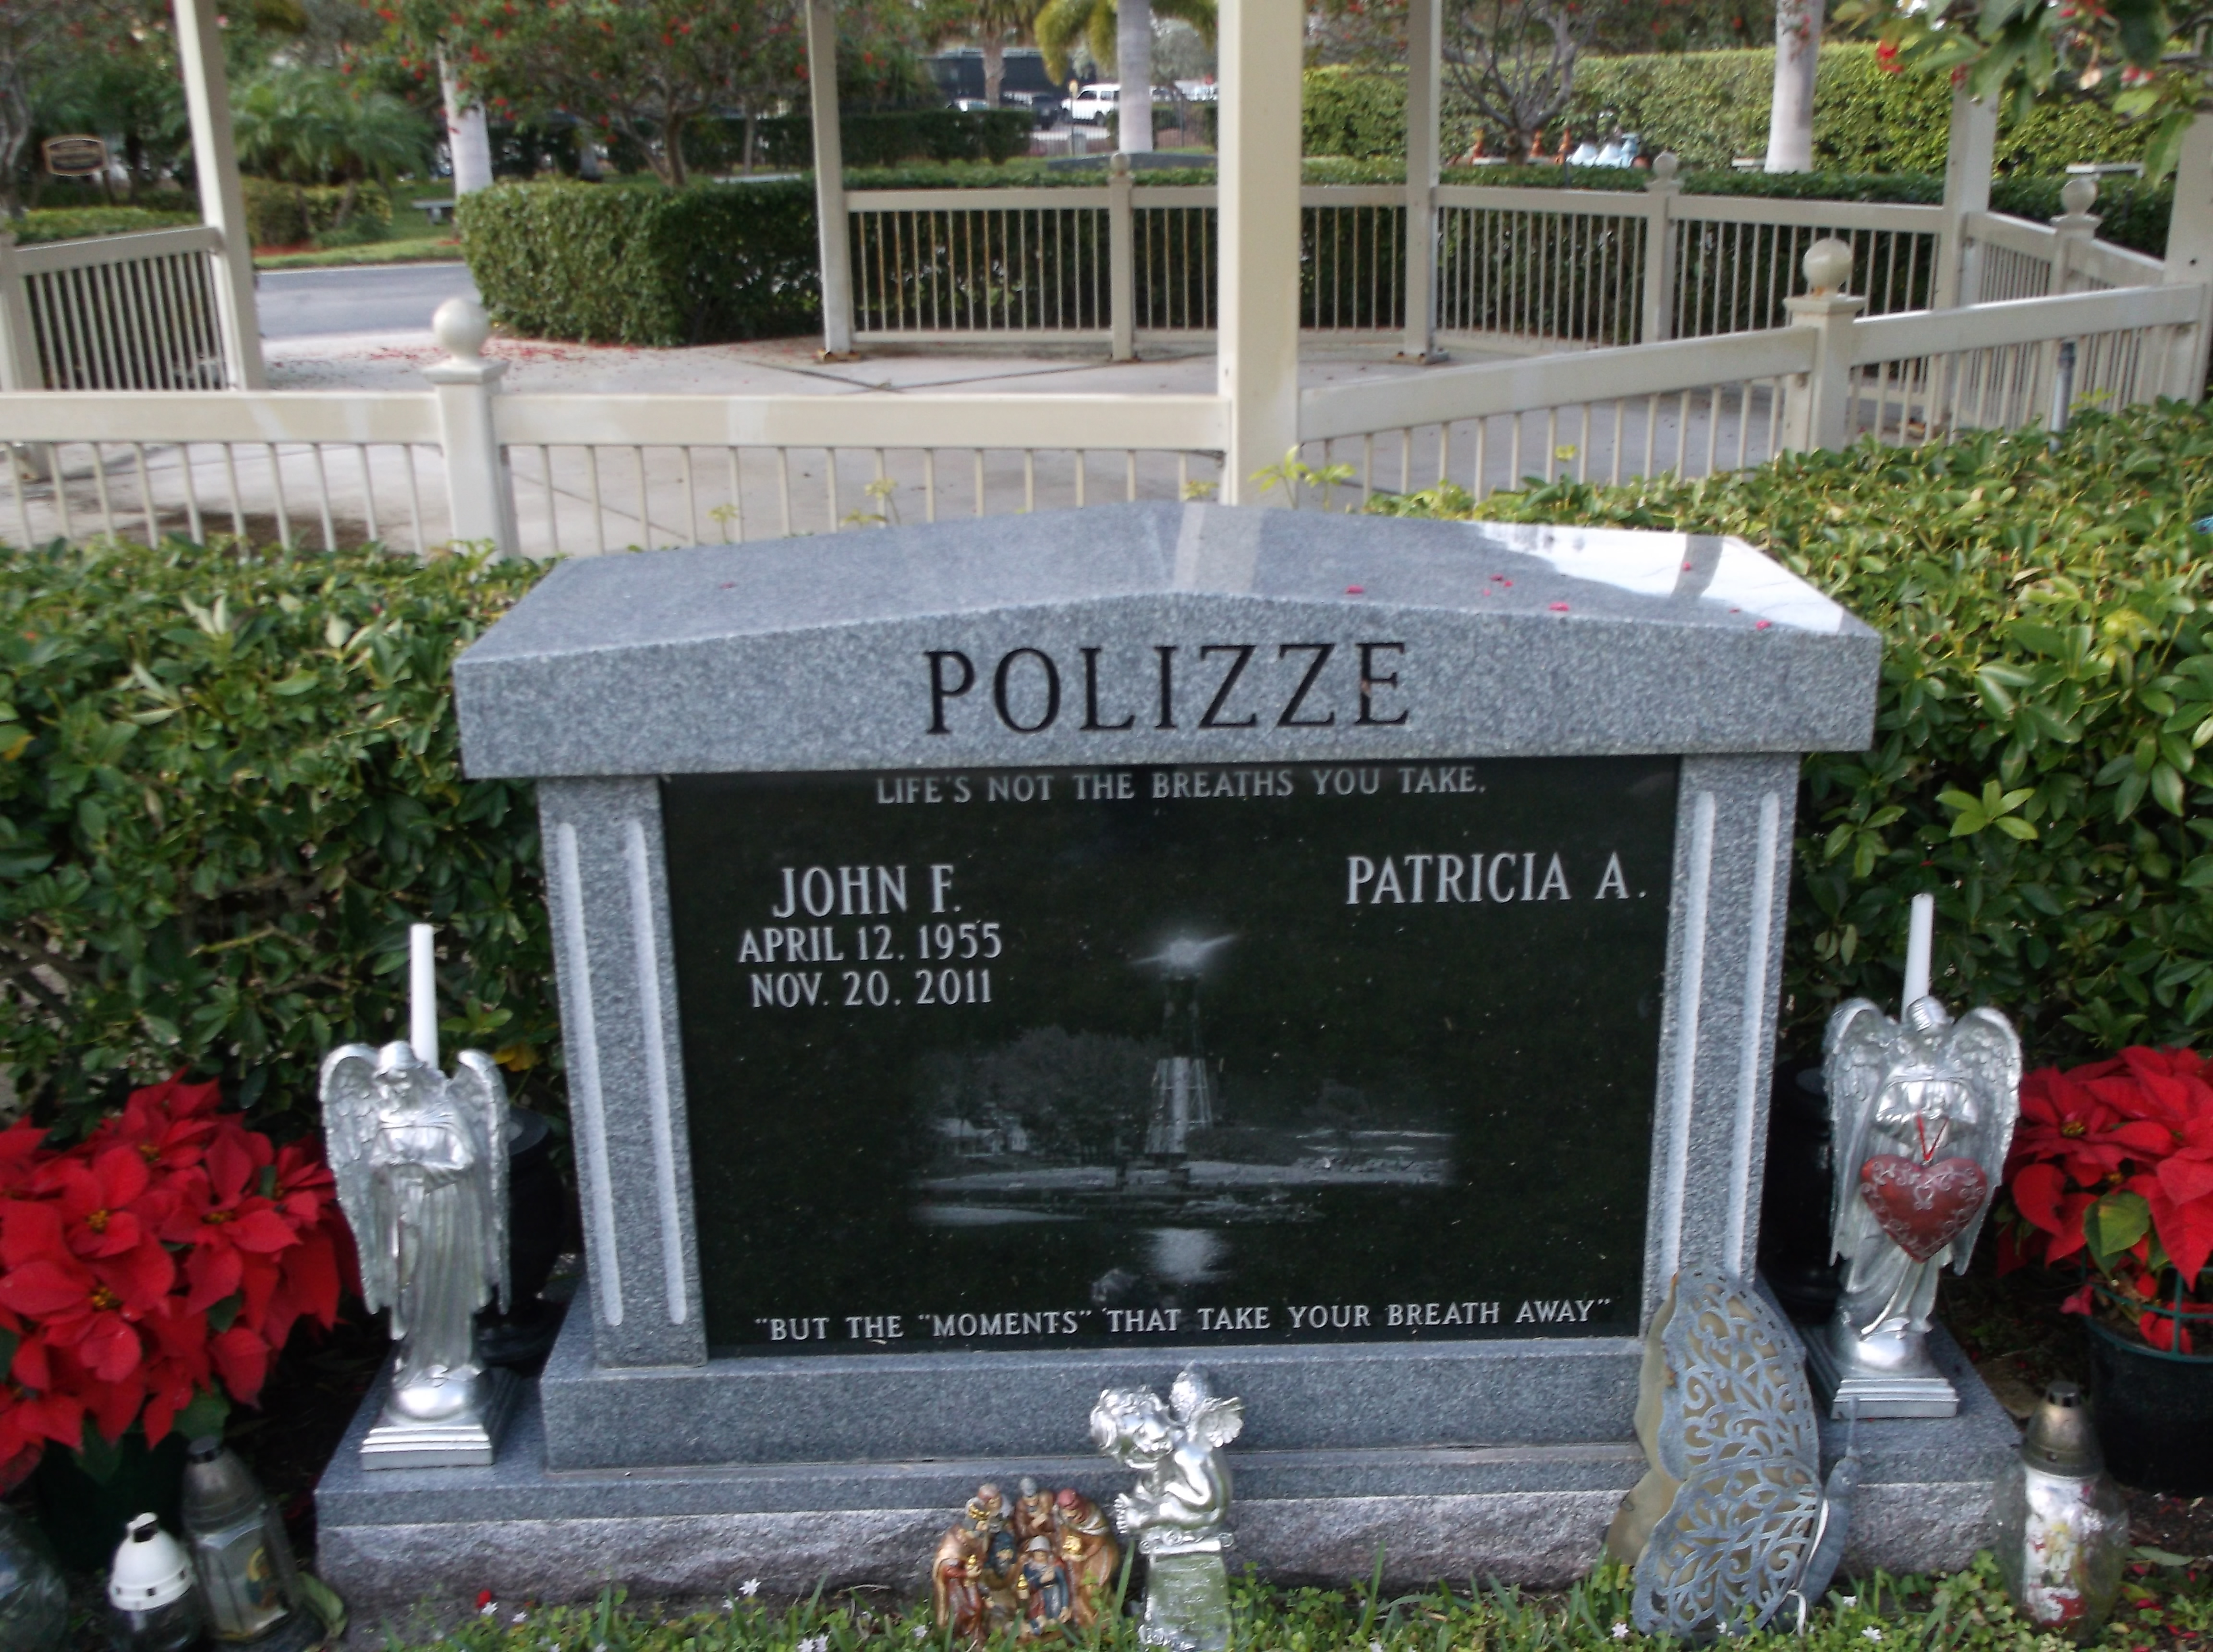 John F Polizze